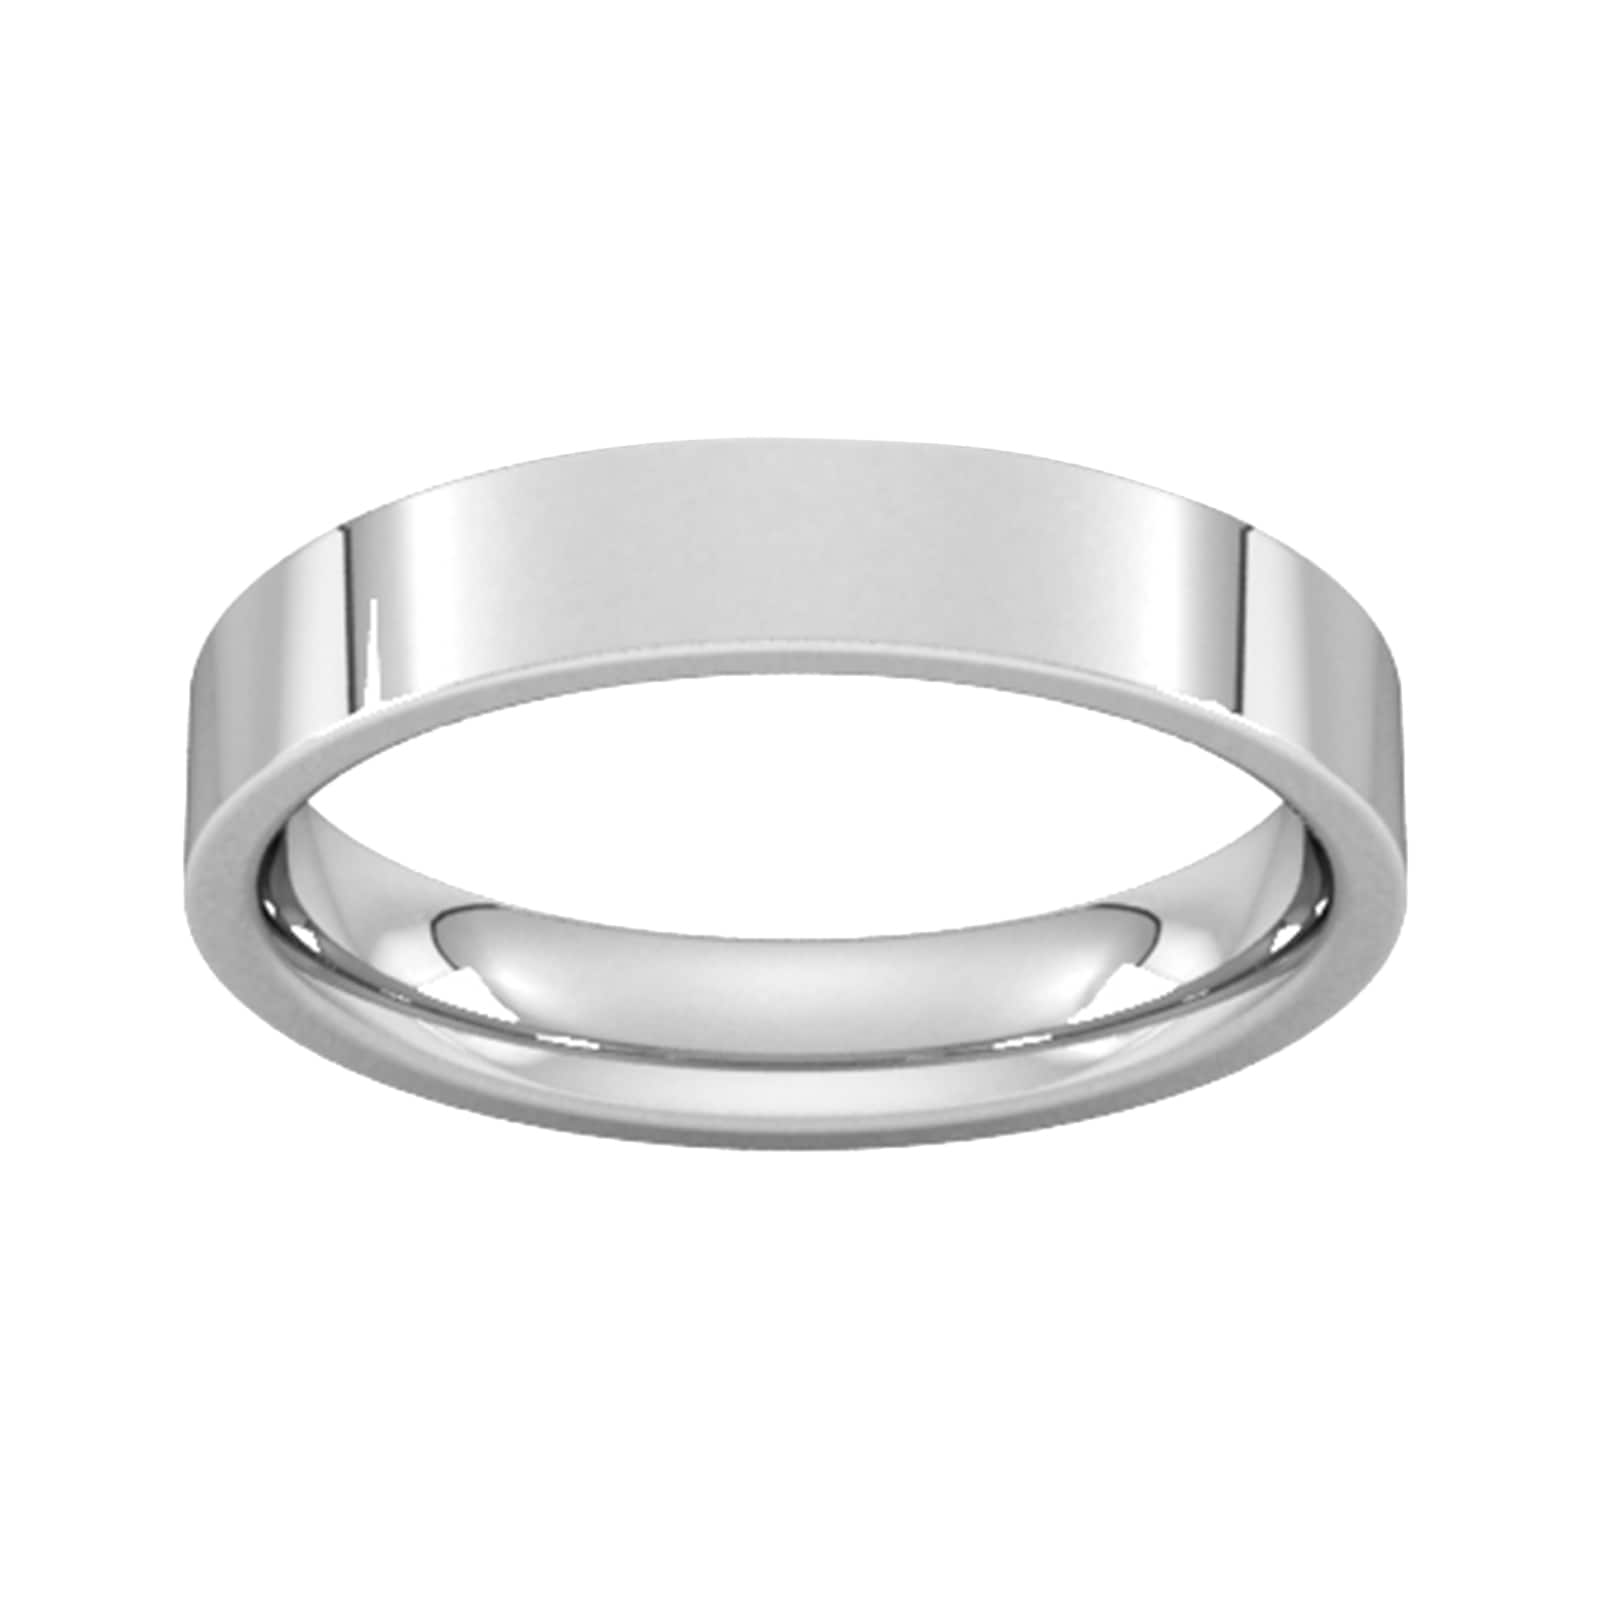 4mm Flat Court Heavy Wedding Ring In 950 Palladium - Ring Size O